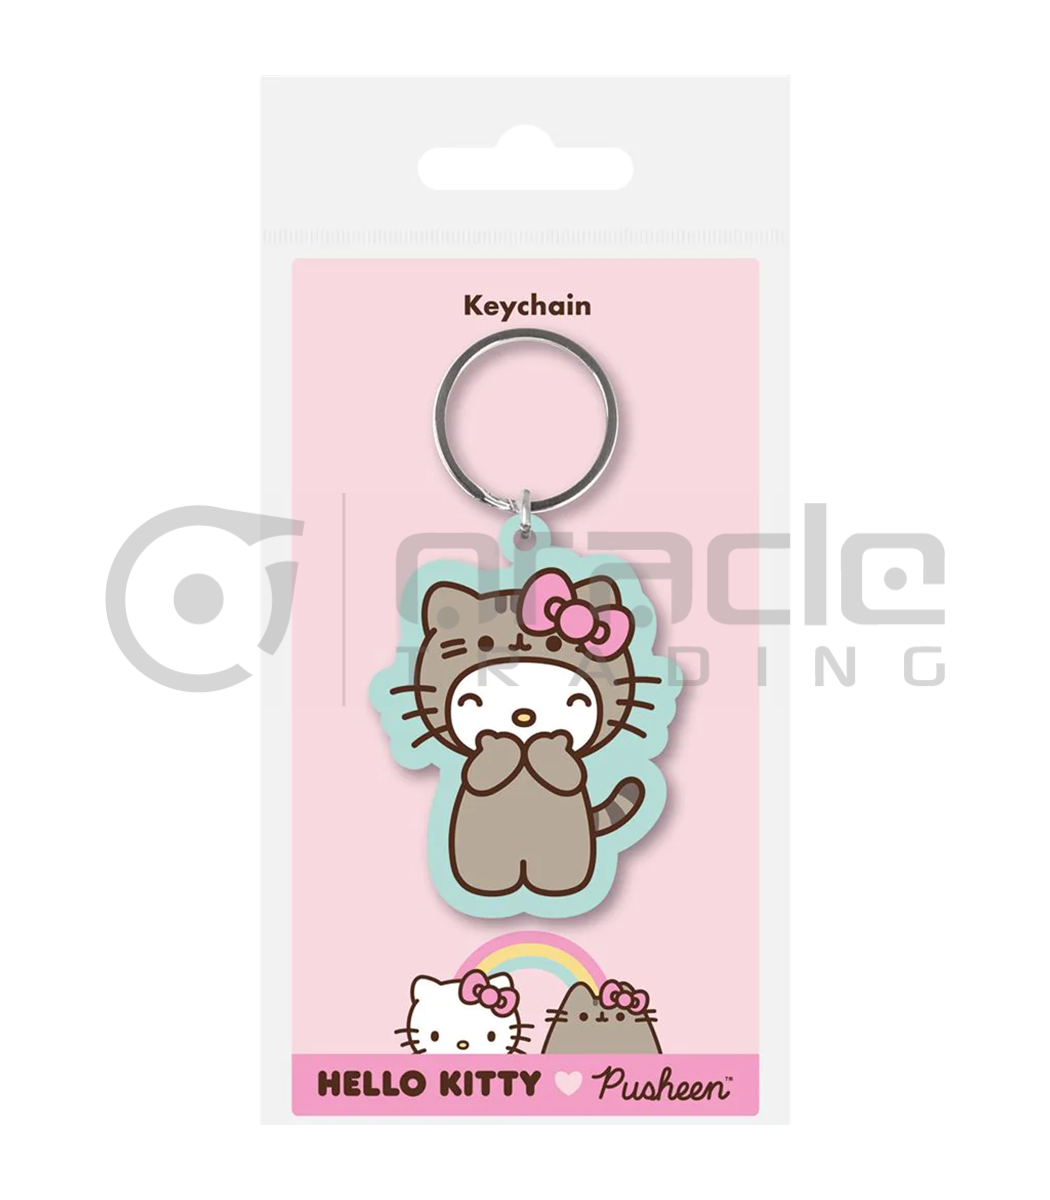 Hello Kitty x Pusheen Keychain - Dress Up